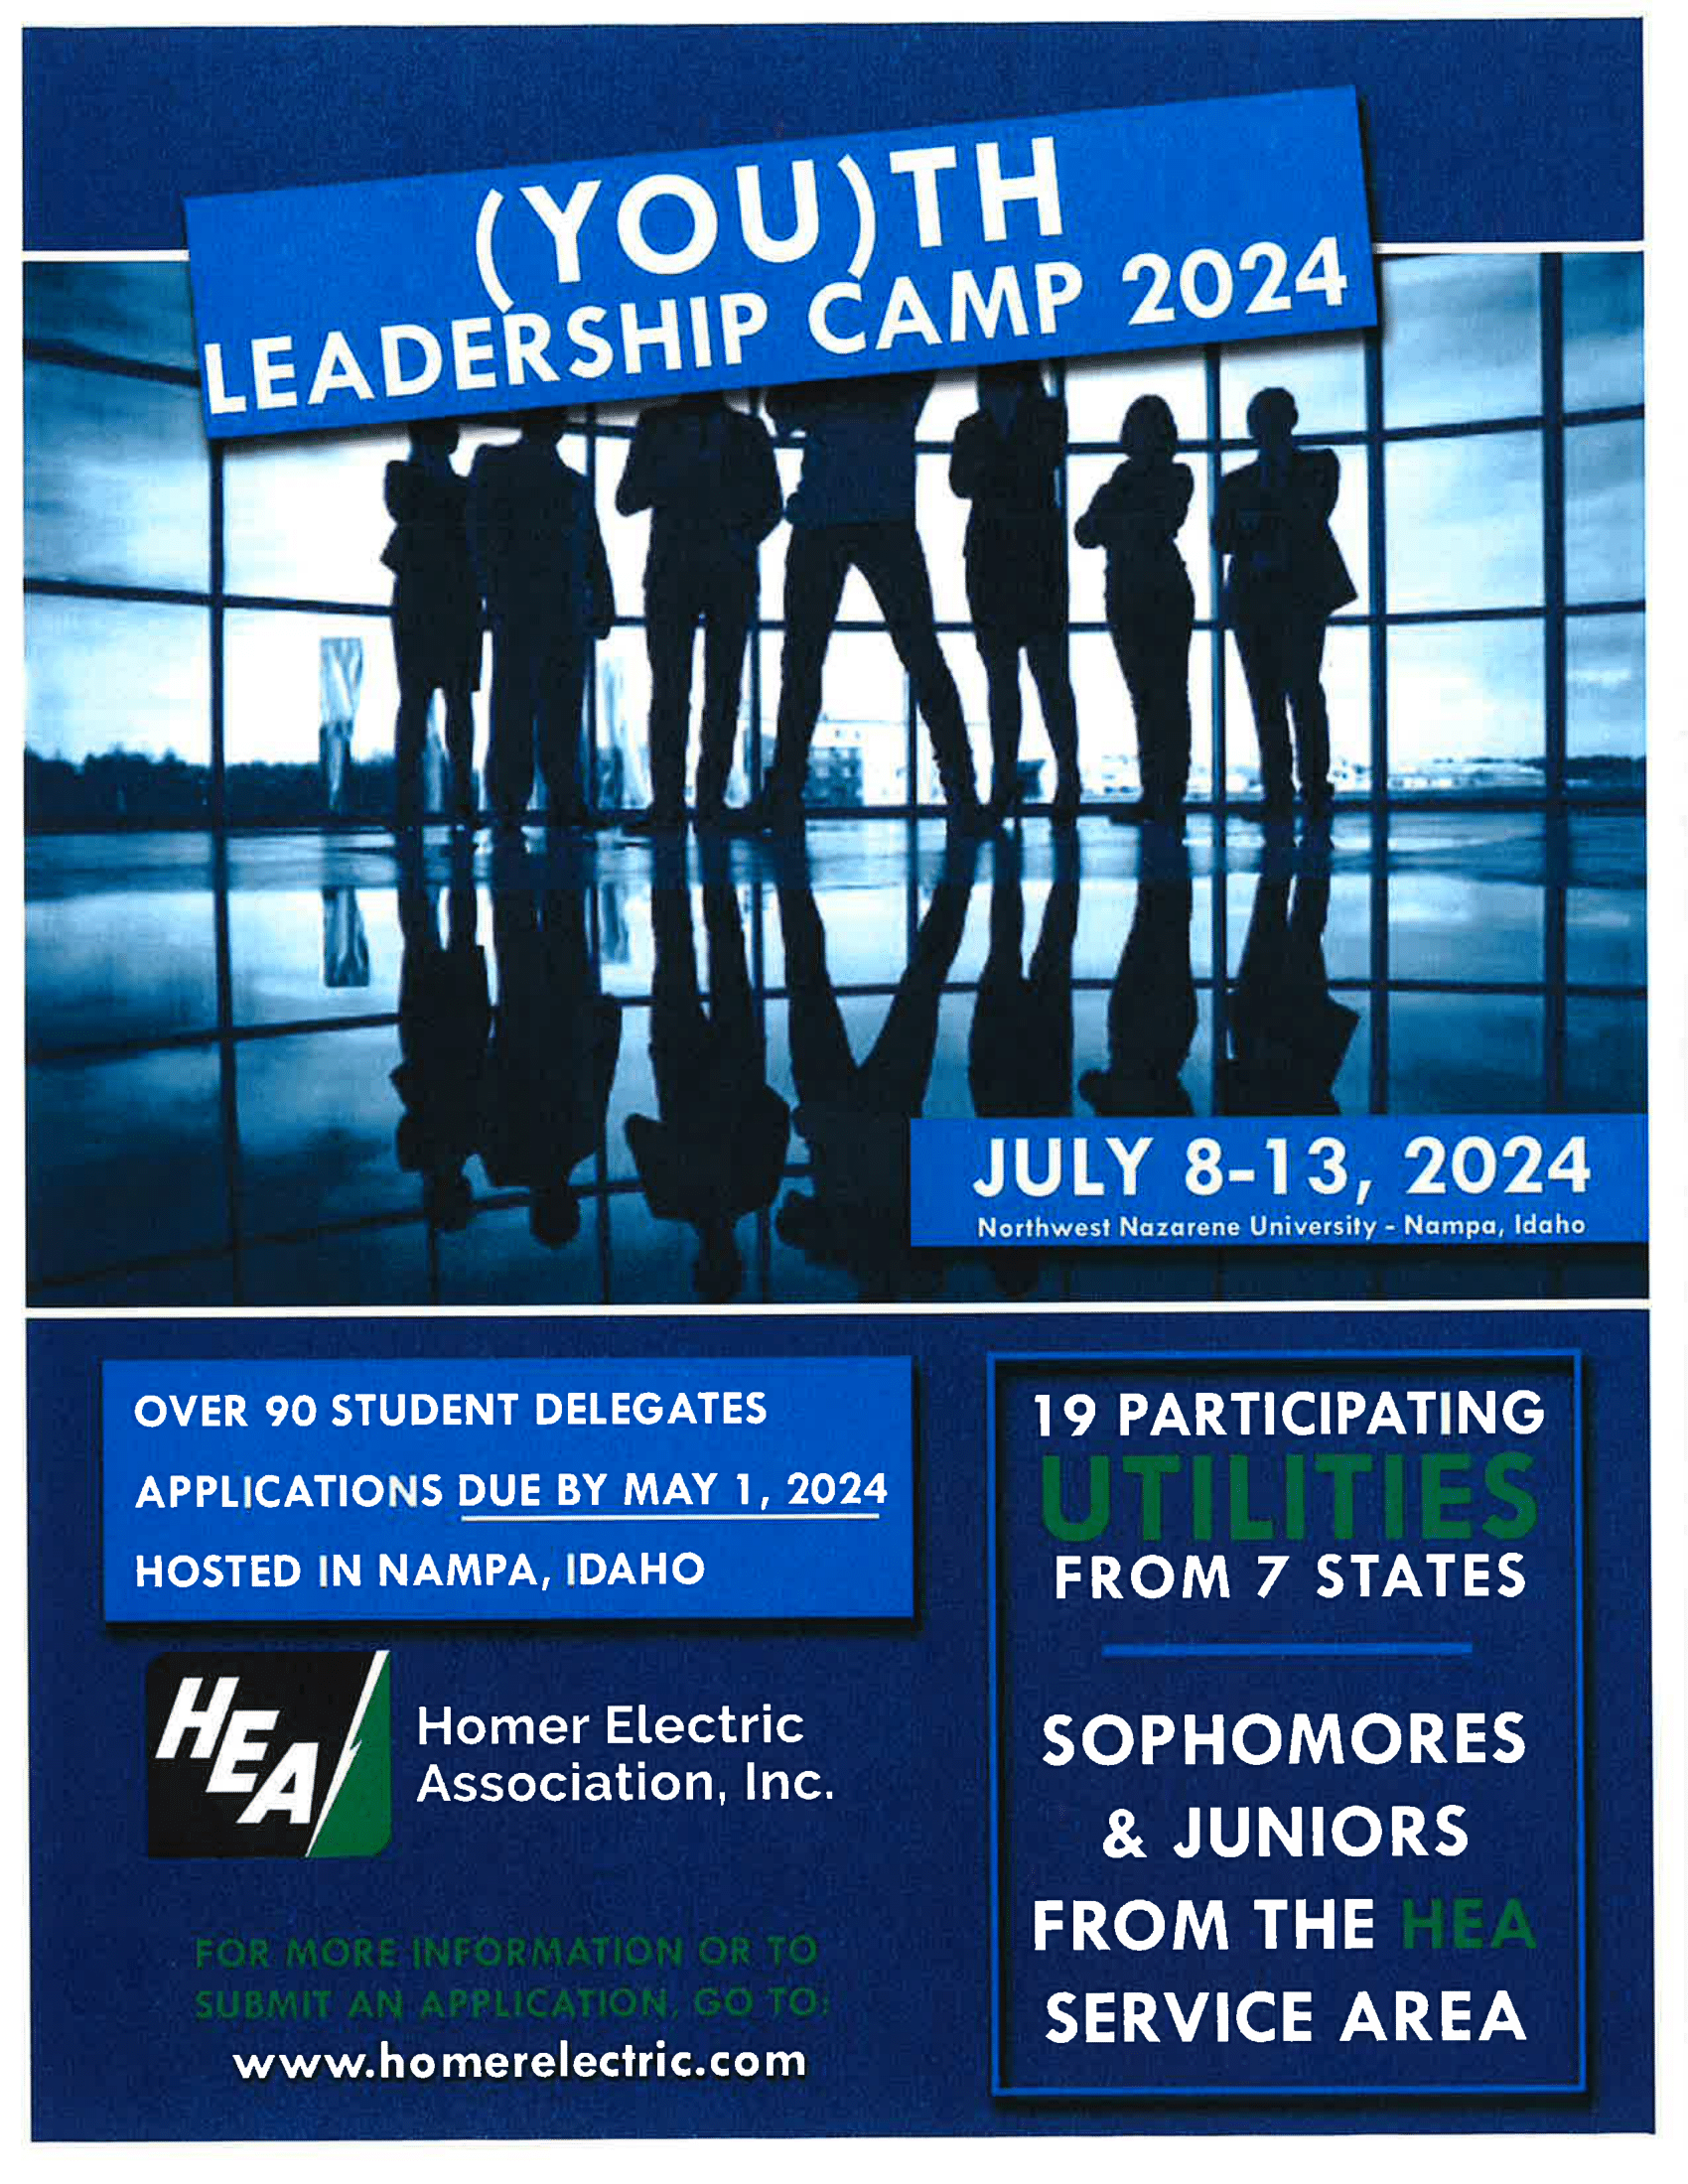 HEA Youth Leadership Camp 2024